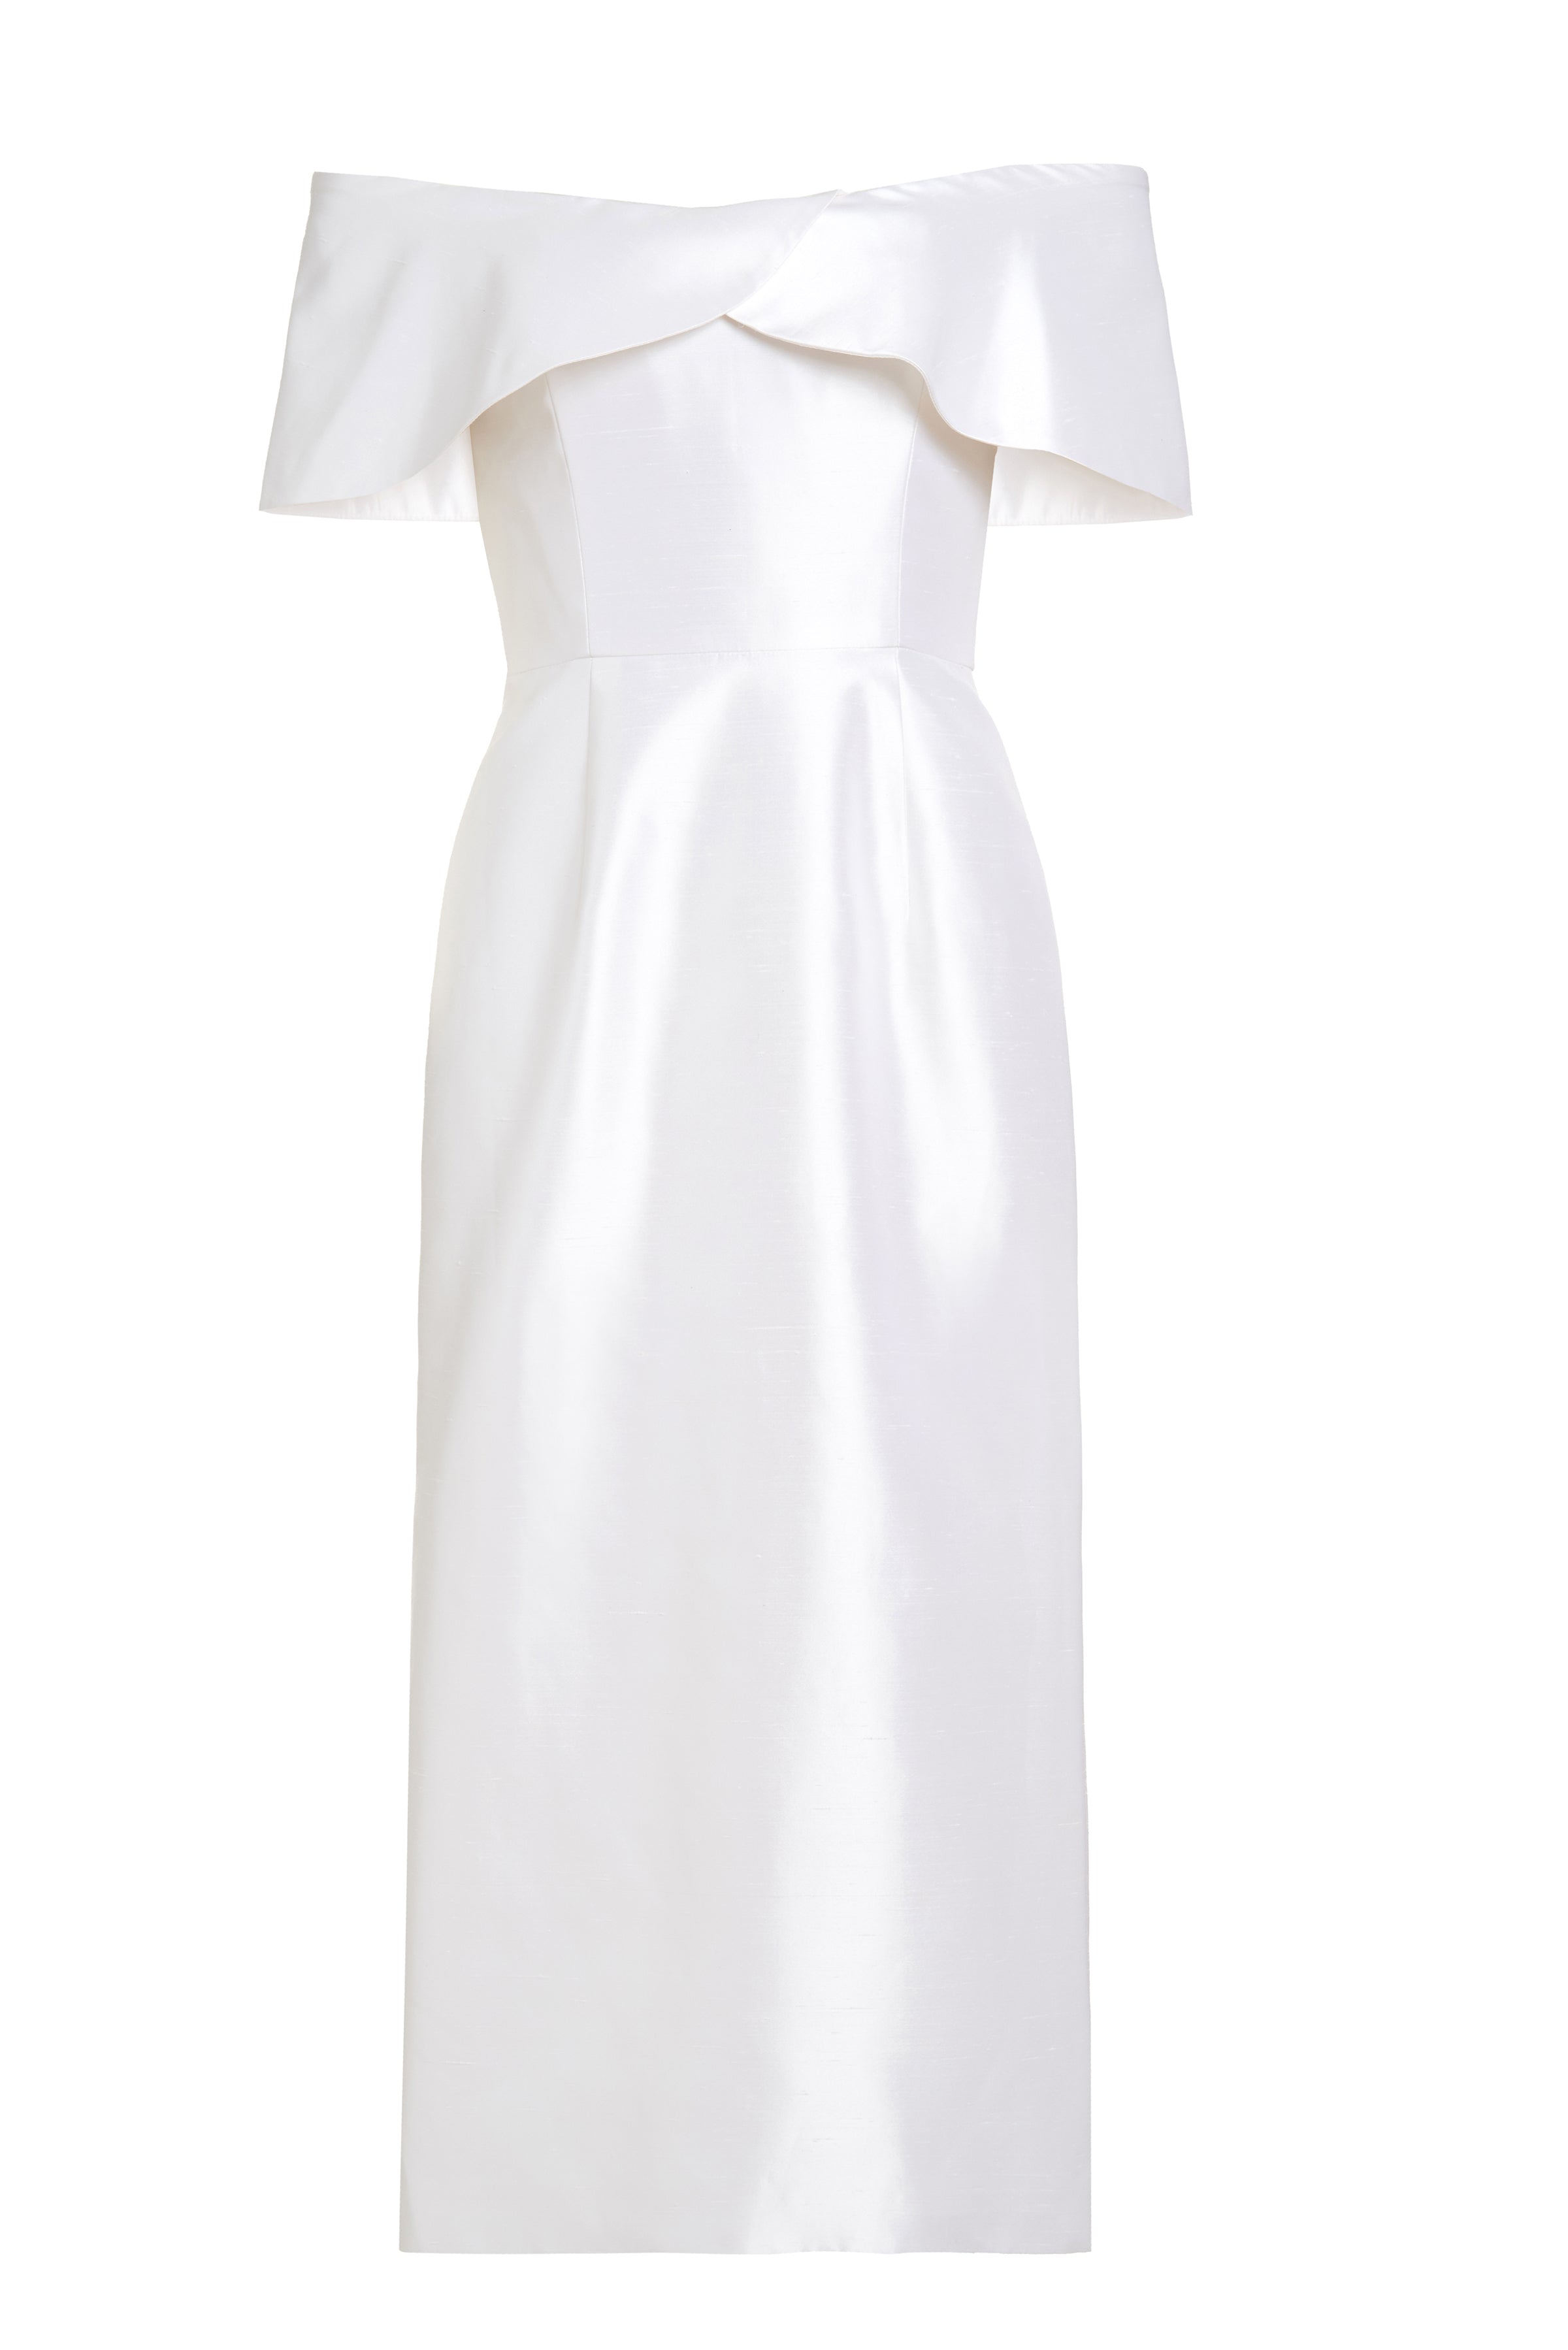 Eveline Off-the-Shoulder White Satin Dupioni Dress